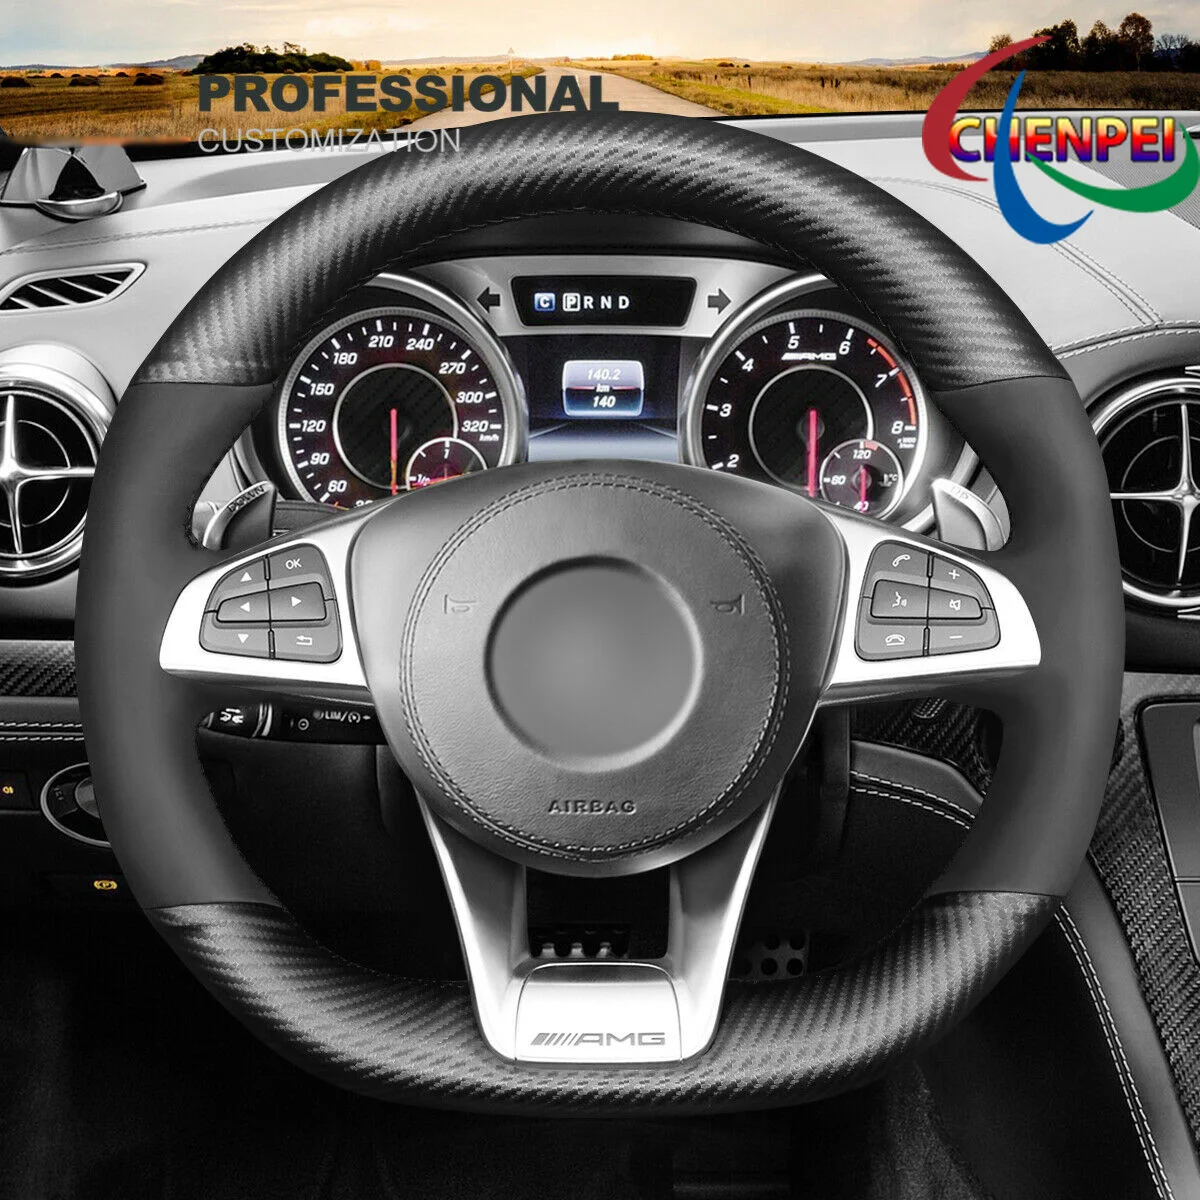 

DIY Hand-Sewn Carbon Fiber Suede Car Steering Wheel Cover For Benz C190 R190 W205 C117 C218 W213 Car Interior Accessories